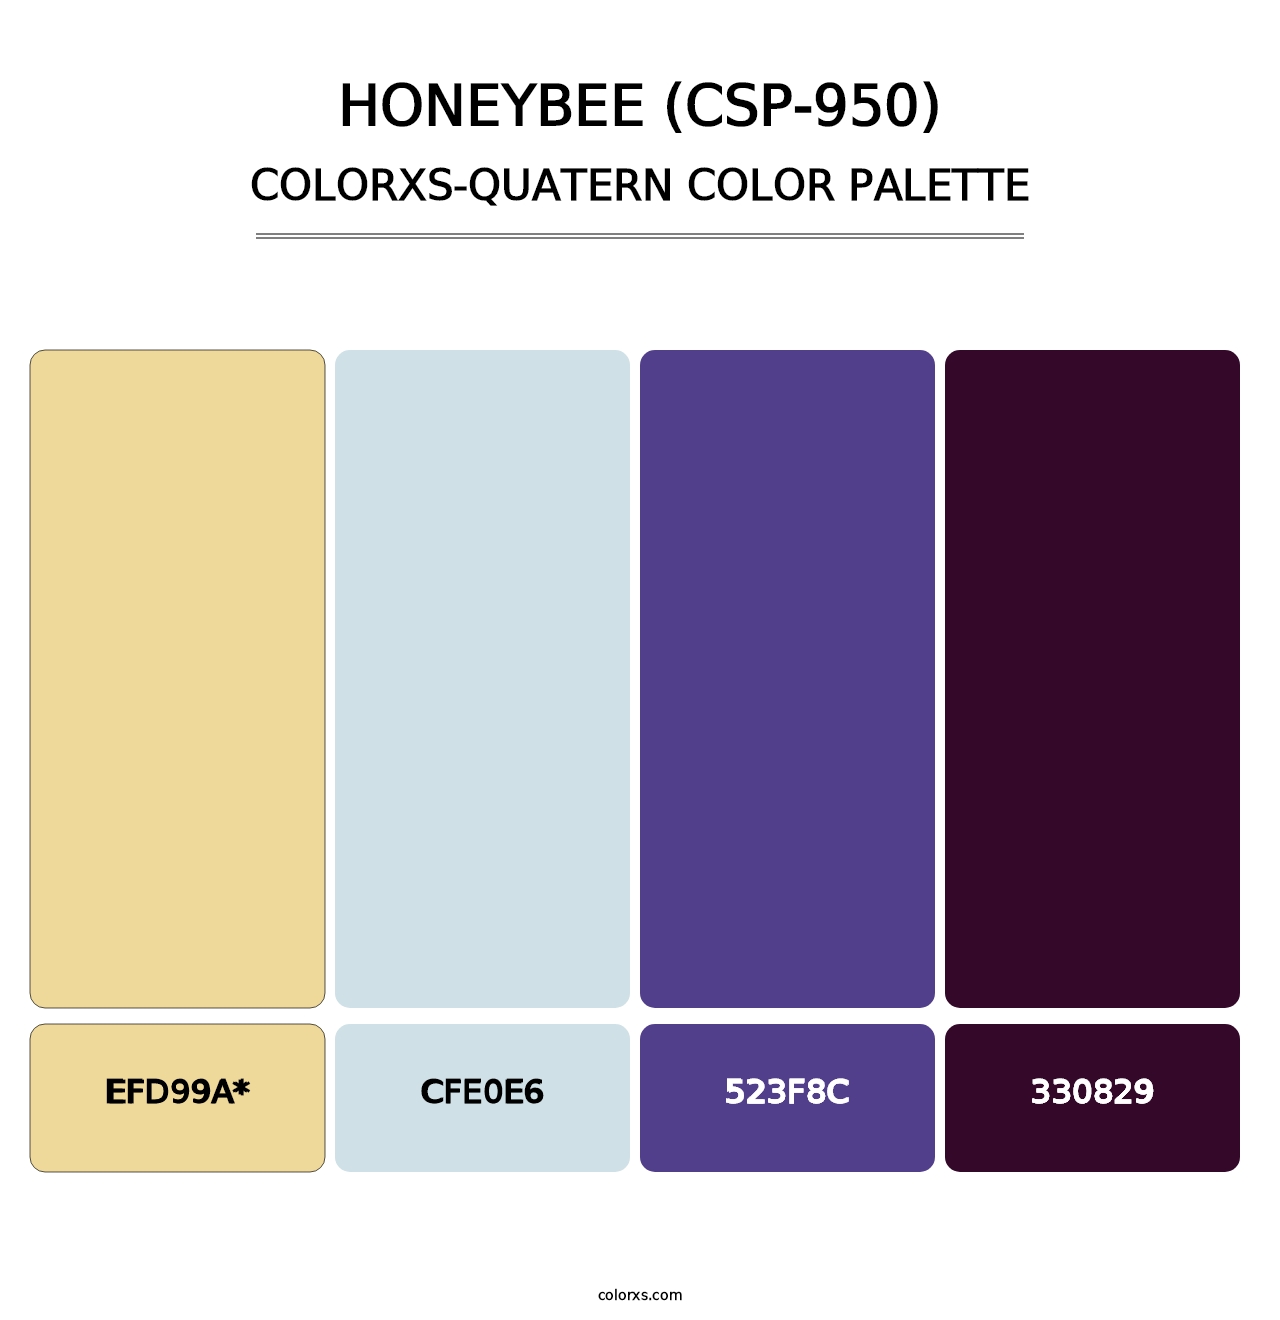 Honeybee (CSP-950) - Colorxs Quatern Palette